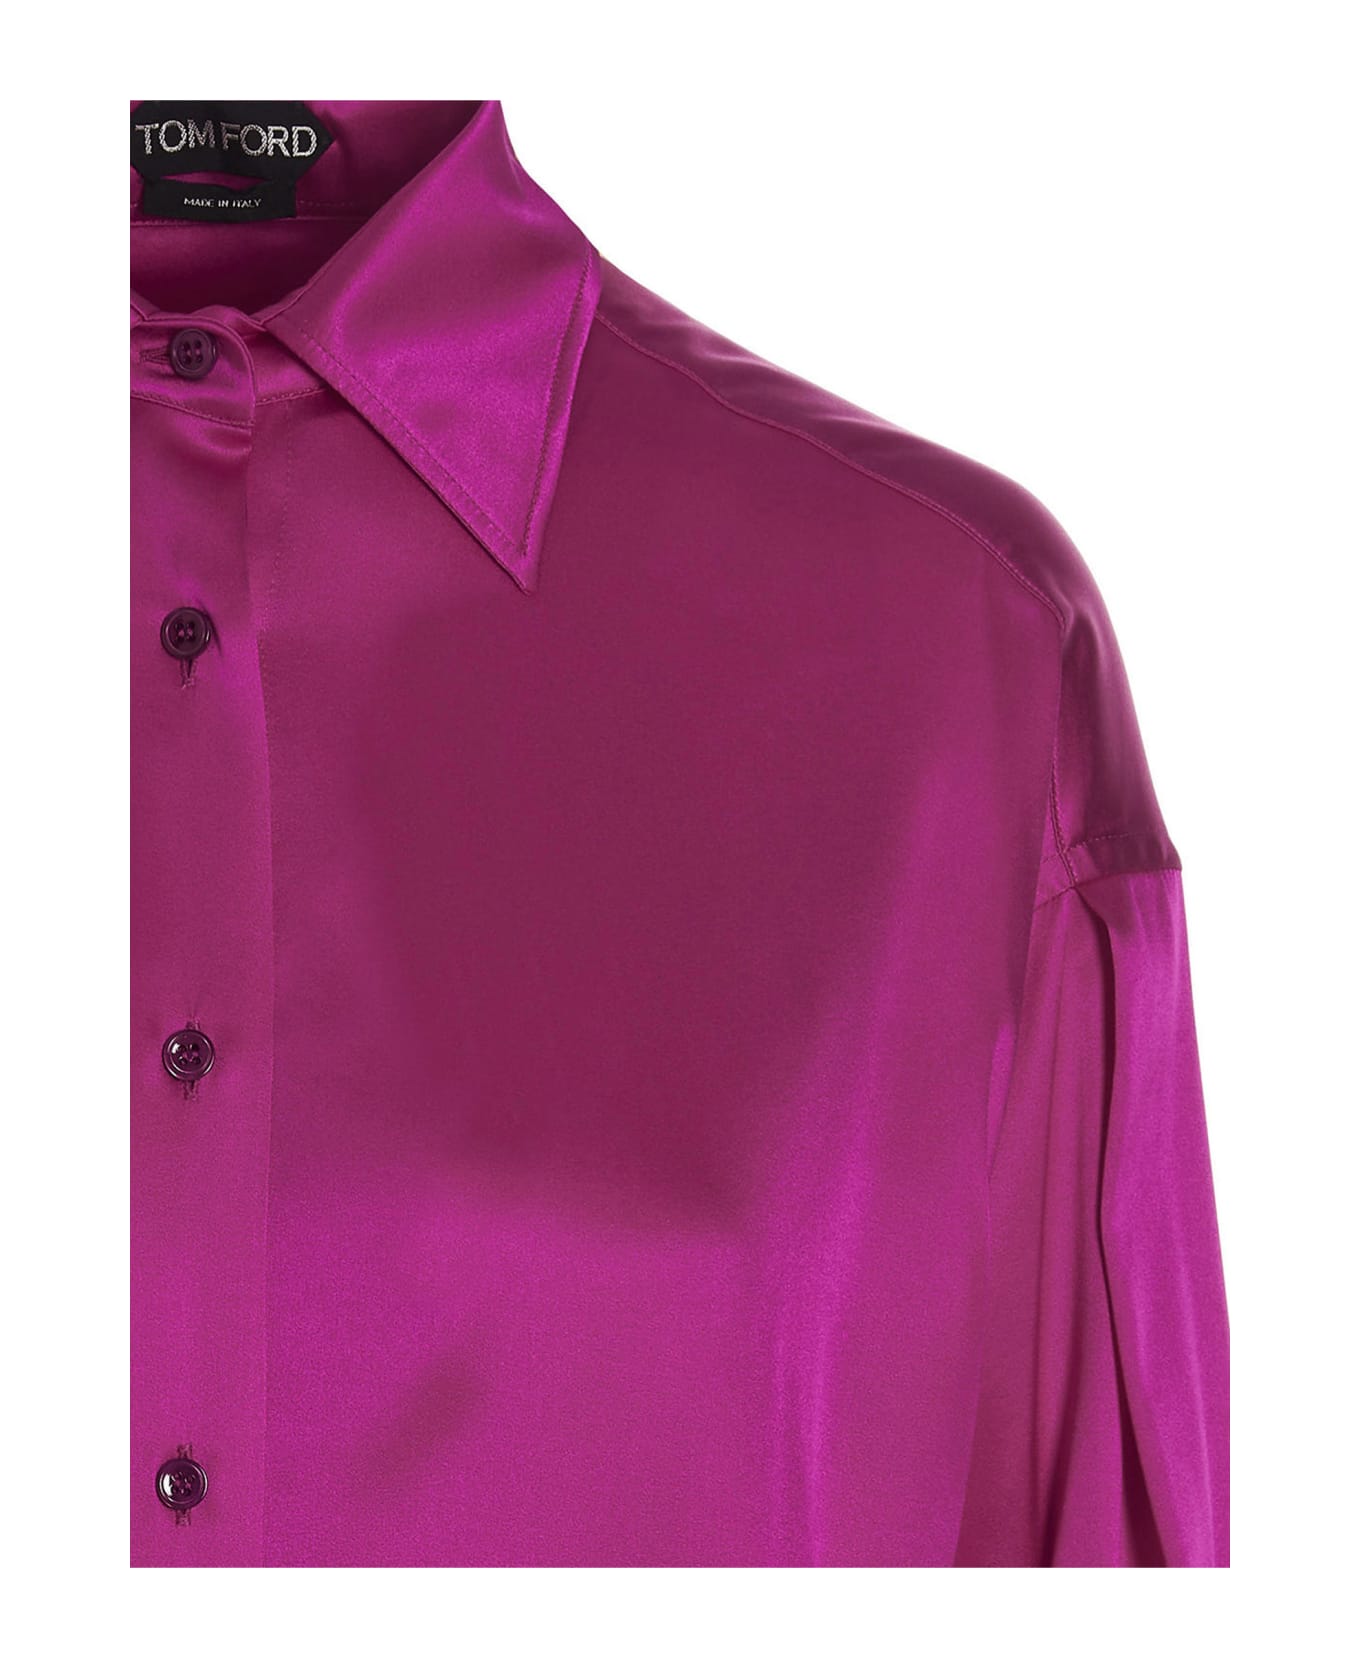 Tom Ford Silk Satin Shirt - HOT PINK